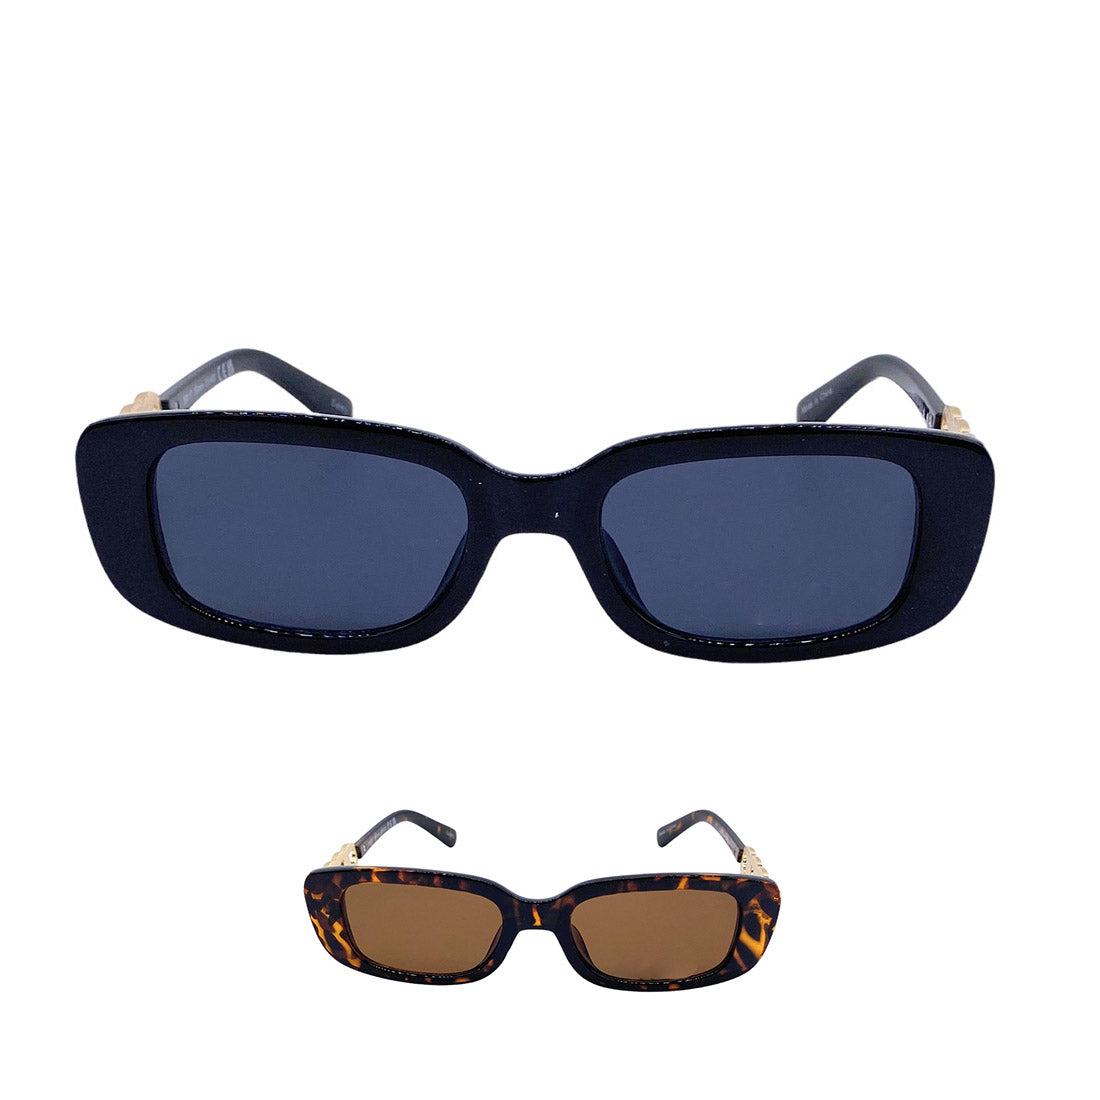 2PCS Polarized Sunglasses for Men Women UV Protection 